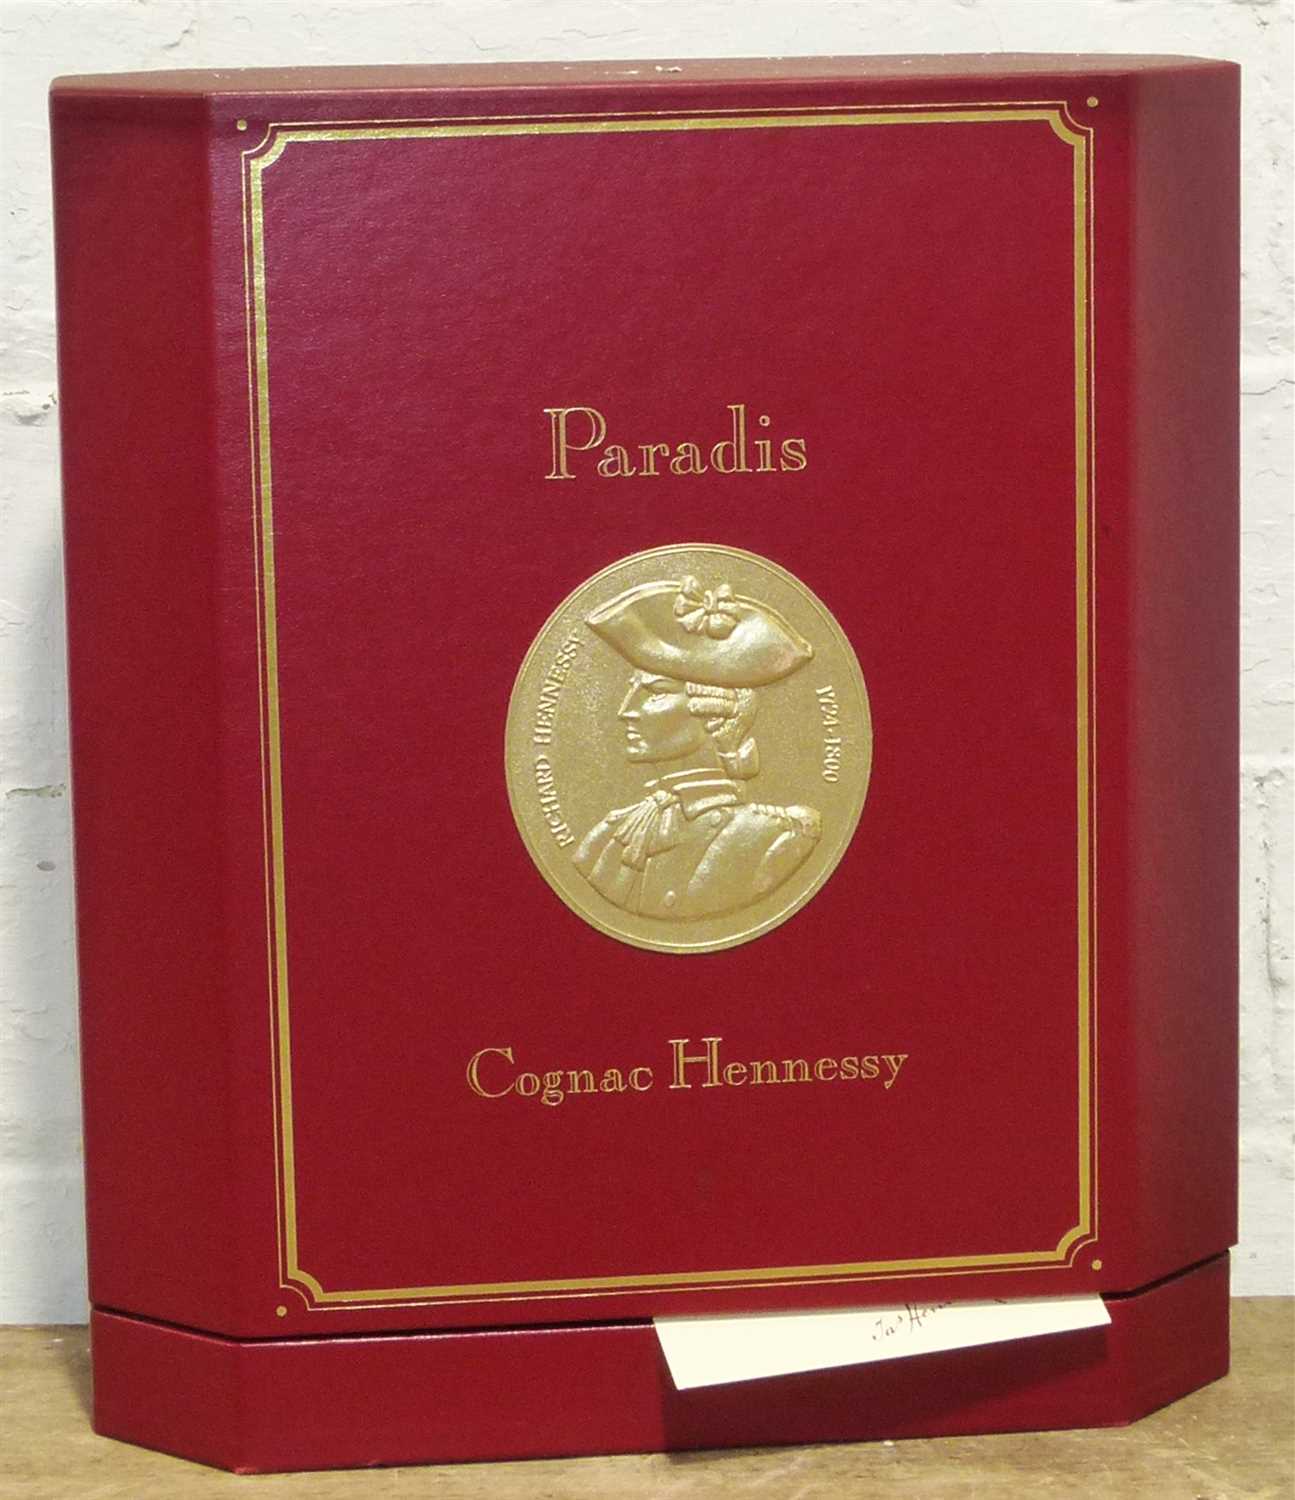 Lot 102 - 1 Bottle Cognac Hennessy “Paradis” in Original Presentation Box